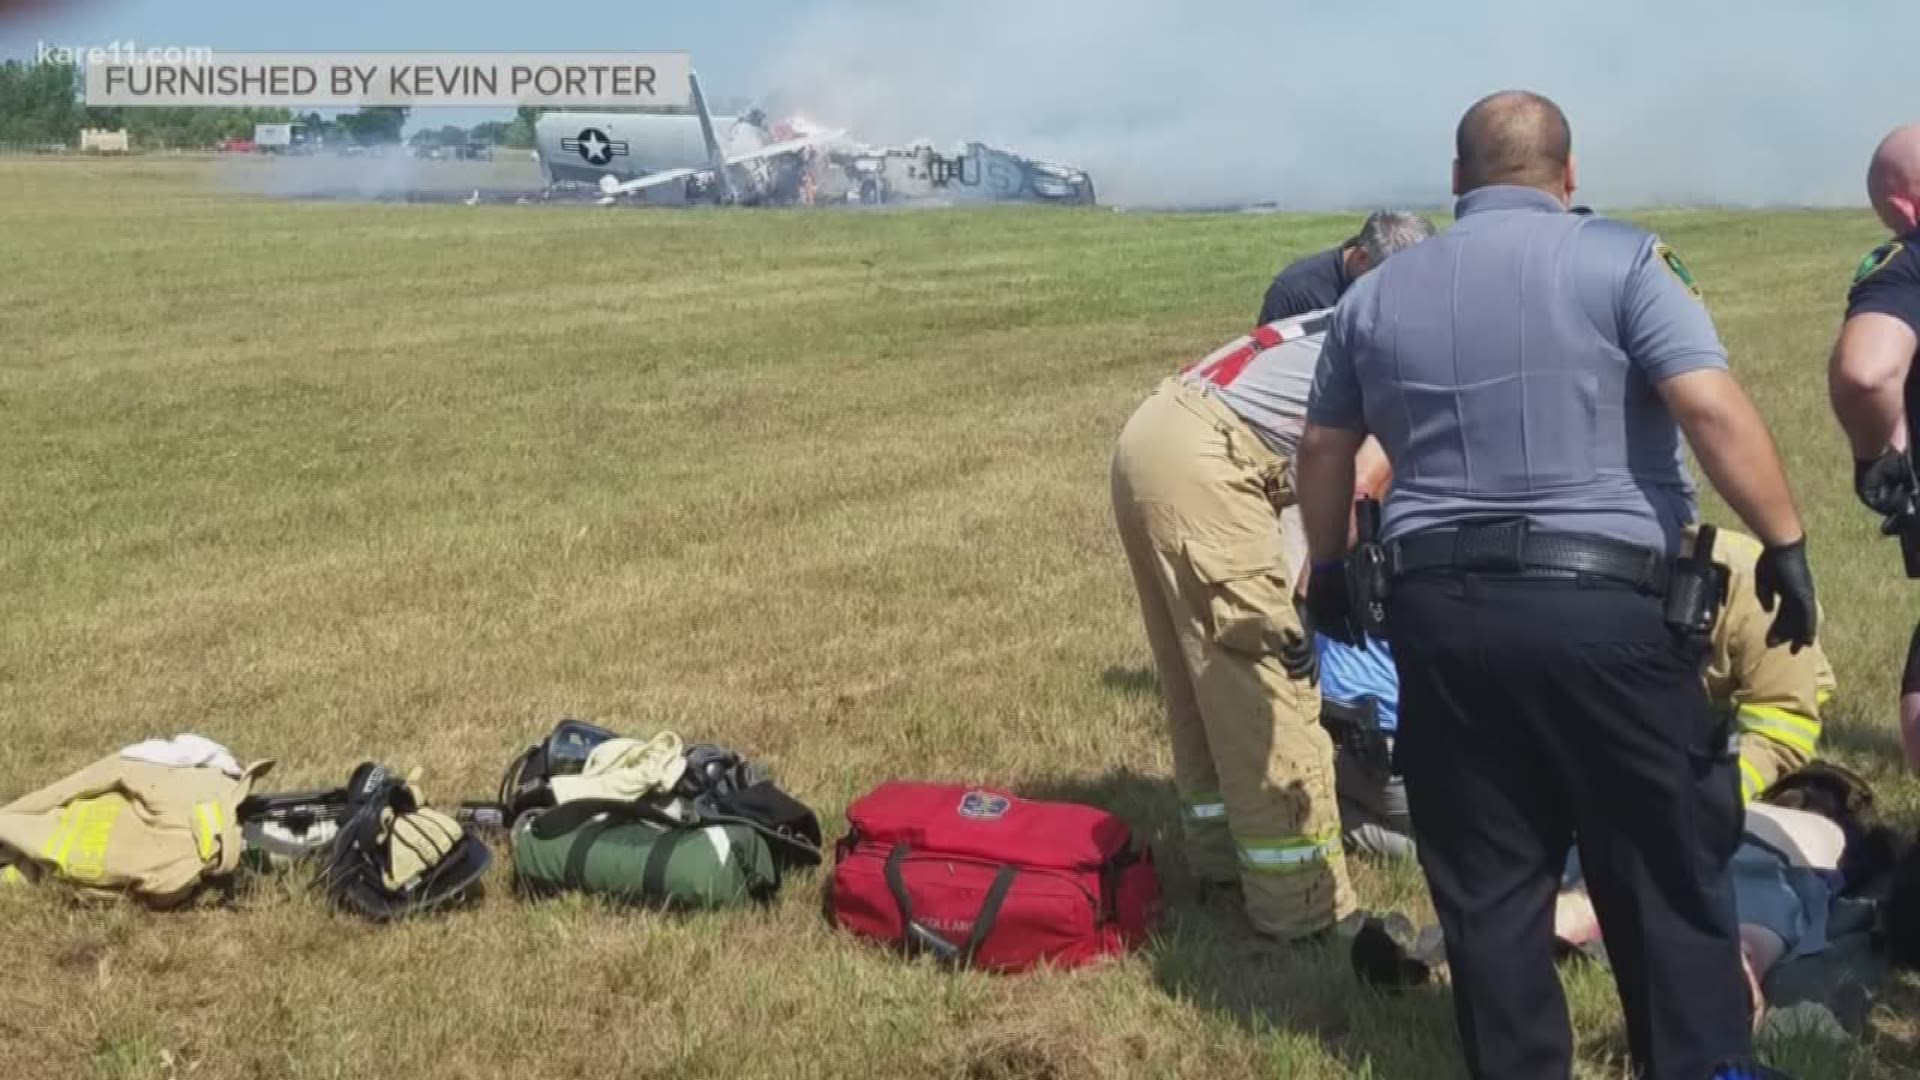 Good Samaritans rush to rescue after plane crash